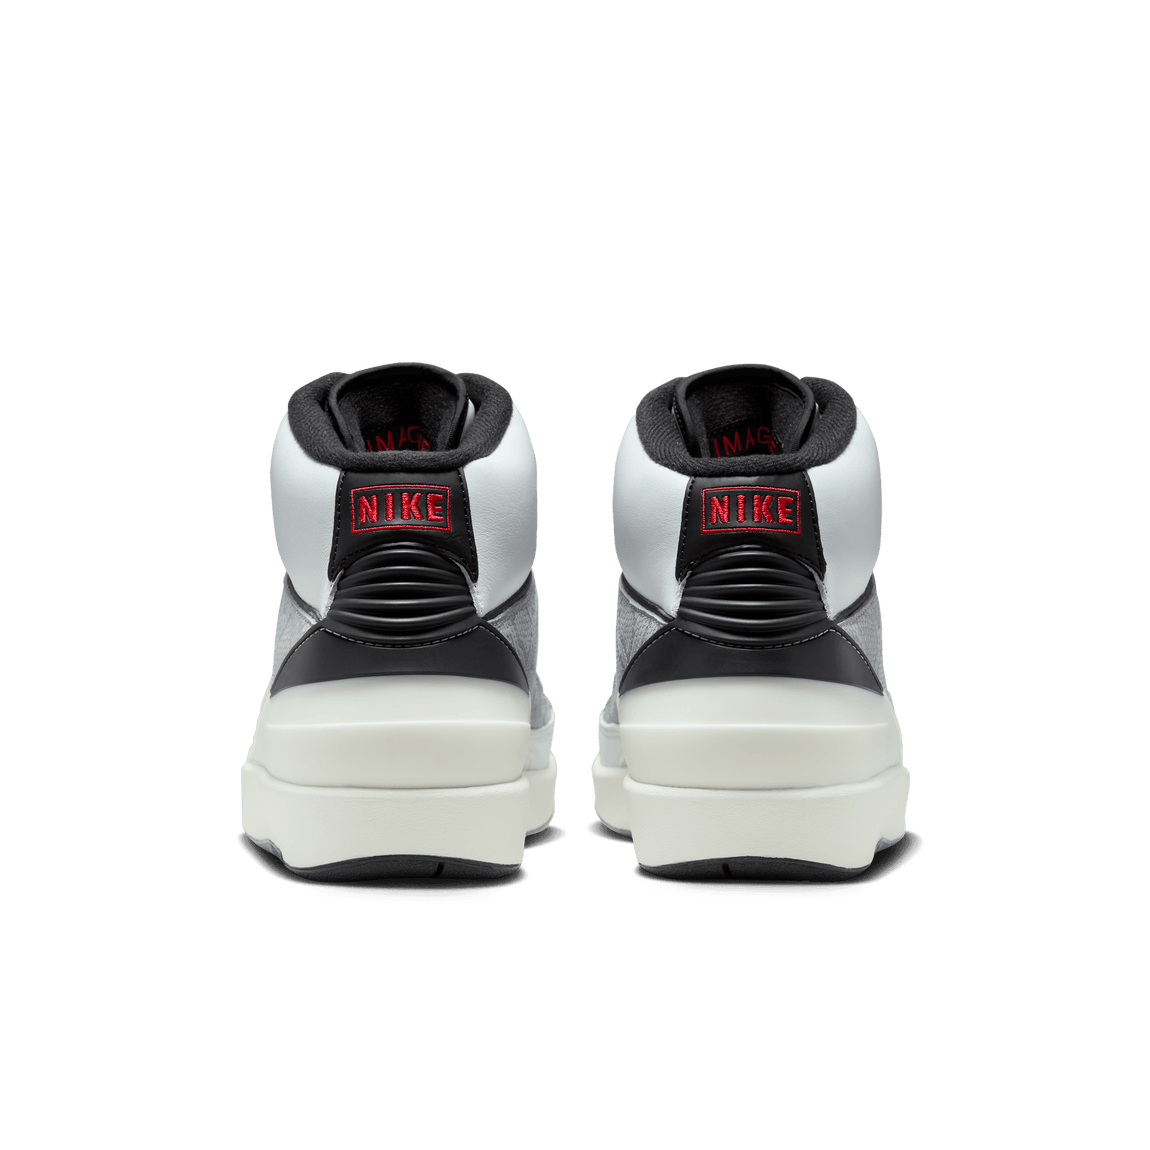 Air Jordan 2 Retro (White / Fire Red / Black / Sail) Release Date 1/20 - Air Jordan 2 Retro (White / Fire Red / Black / Sail) Release Date 1/20 - 